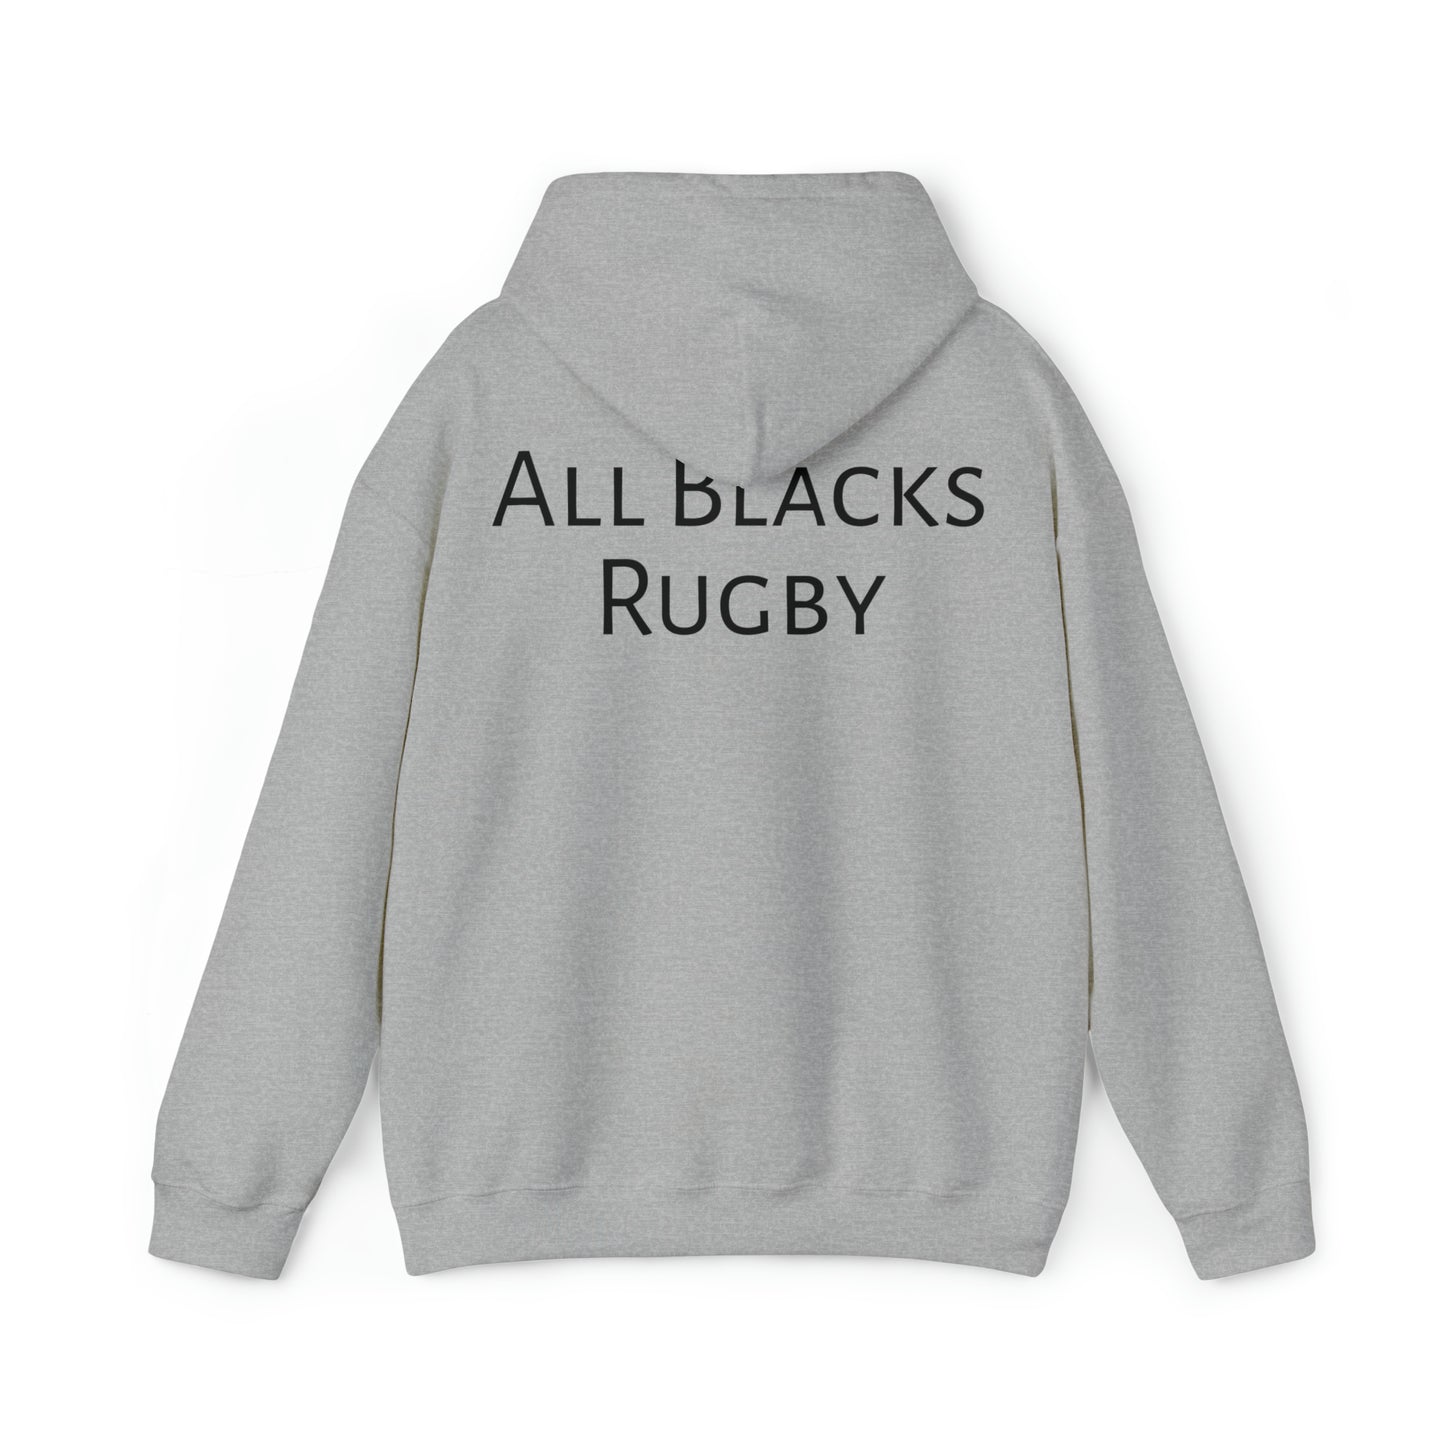 Ready All Blacks - light hoodies